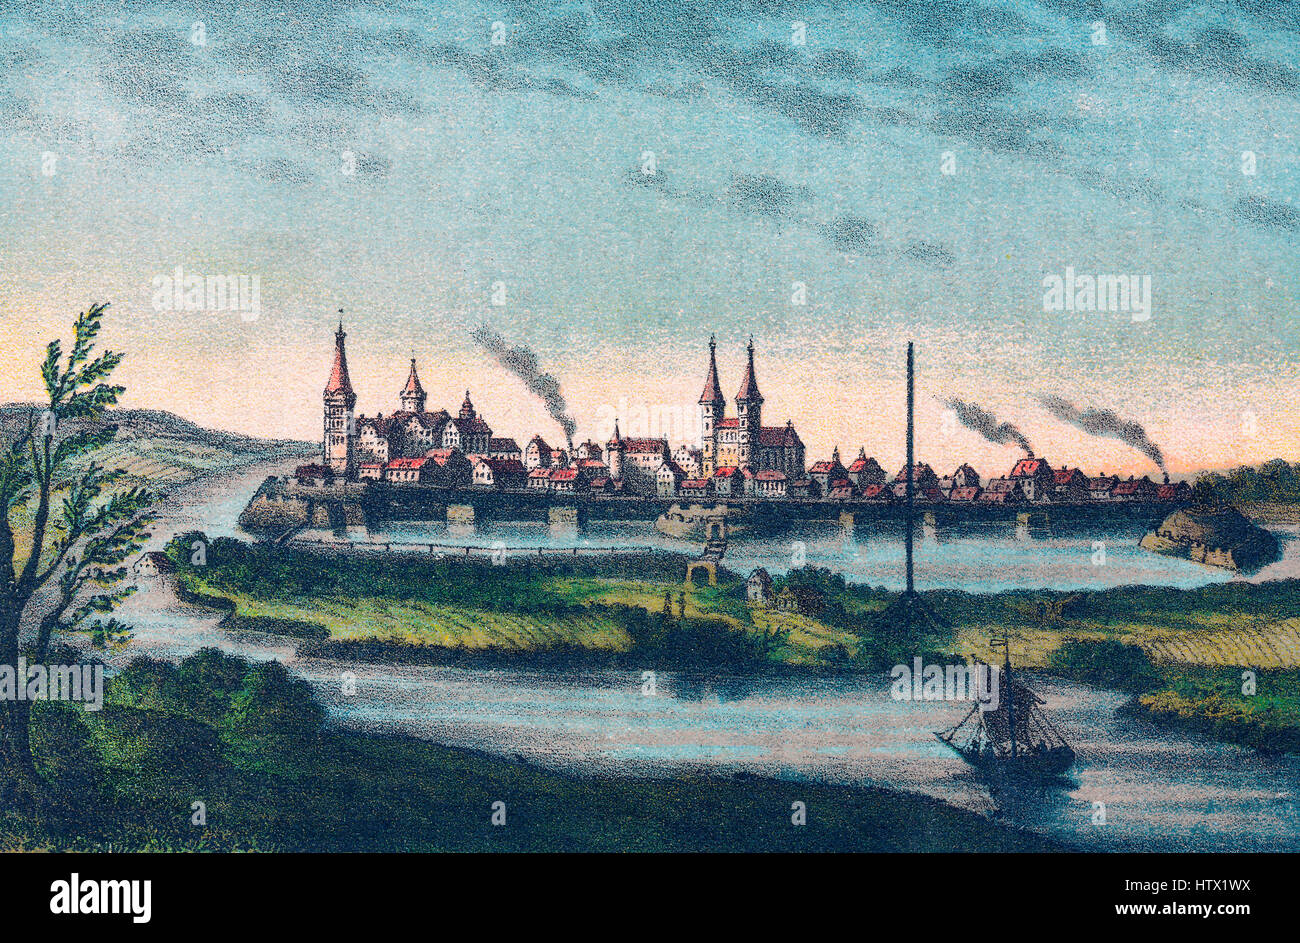 Ciudad de Lutherstadt Wittenberg, Sajonia-Anhalt, Alemania, siglo xvi Foto de stock